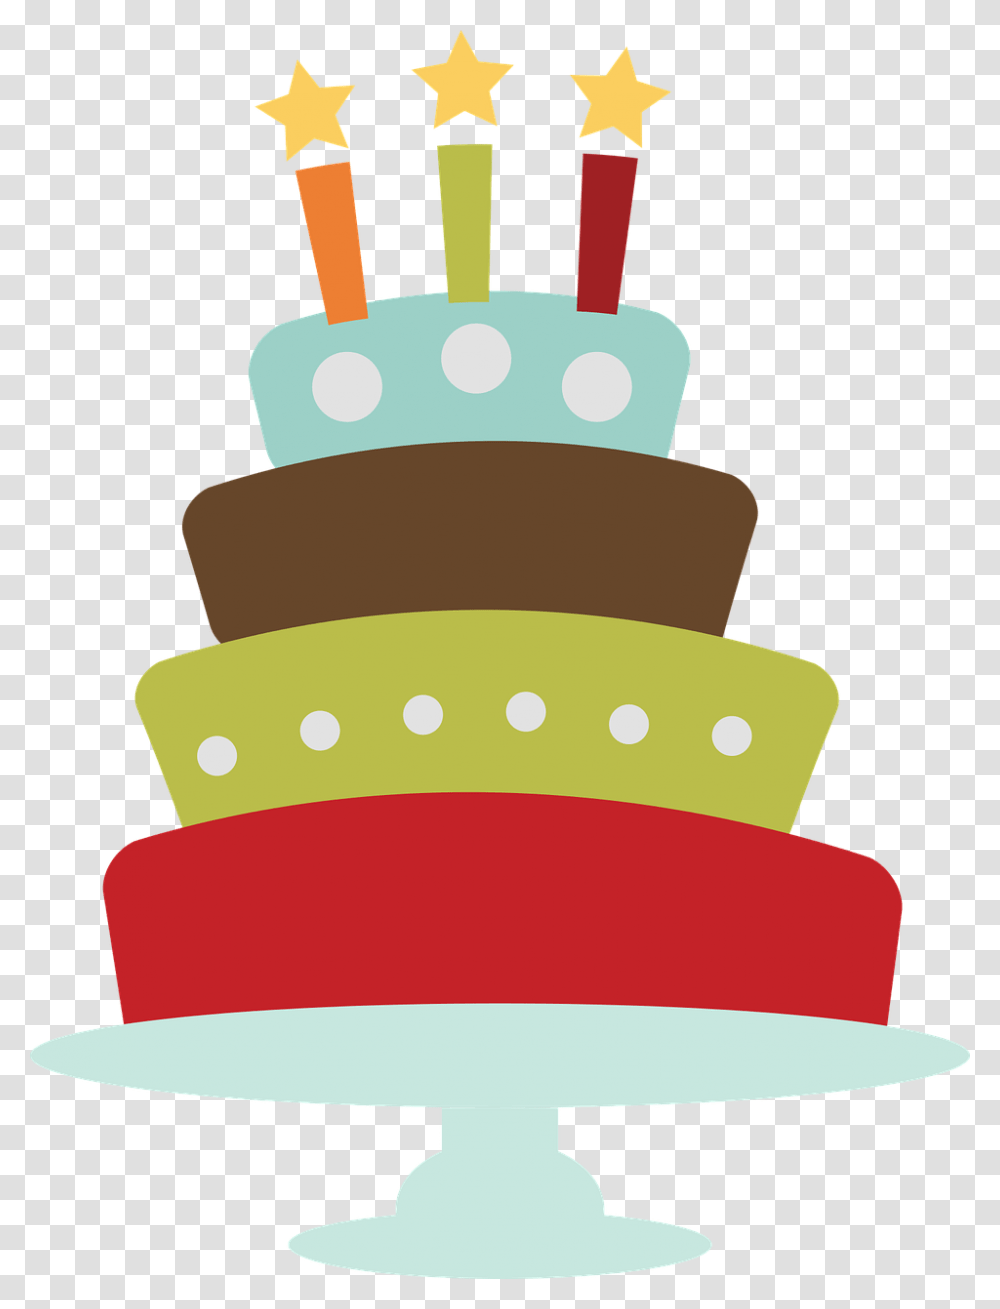 Birthdaycakeclip Artfree Vector Graphicsfree Pictures, Dessert, Food, Birthday Cake, Wedding Cake Transparent Png